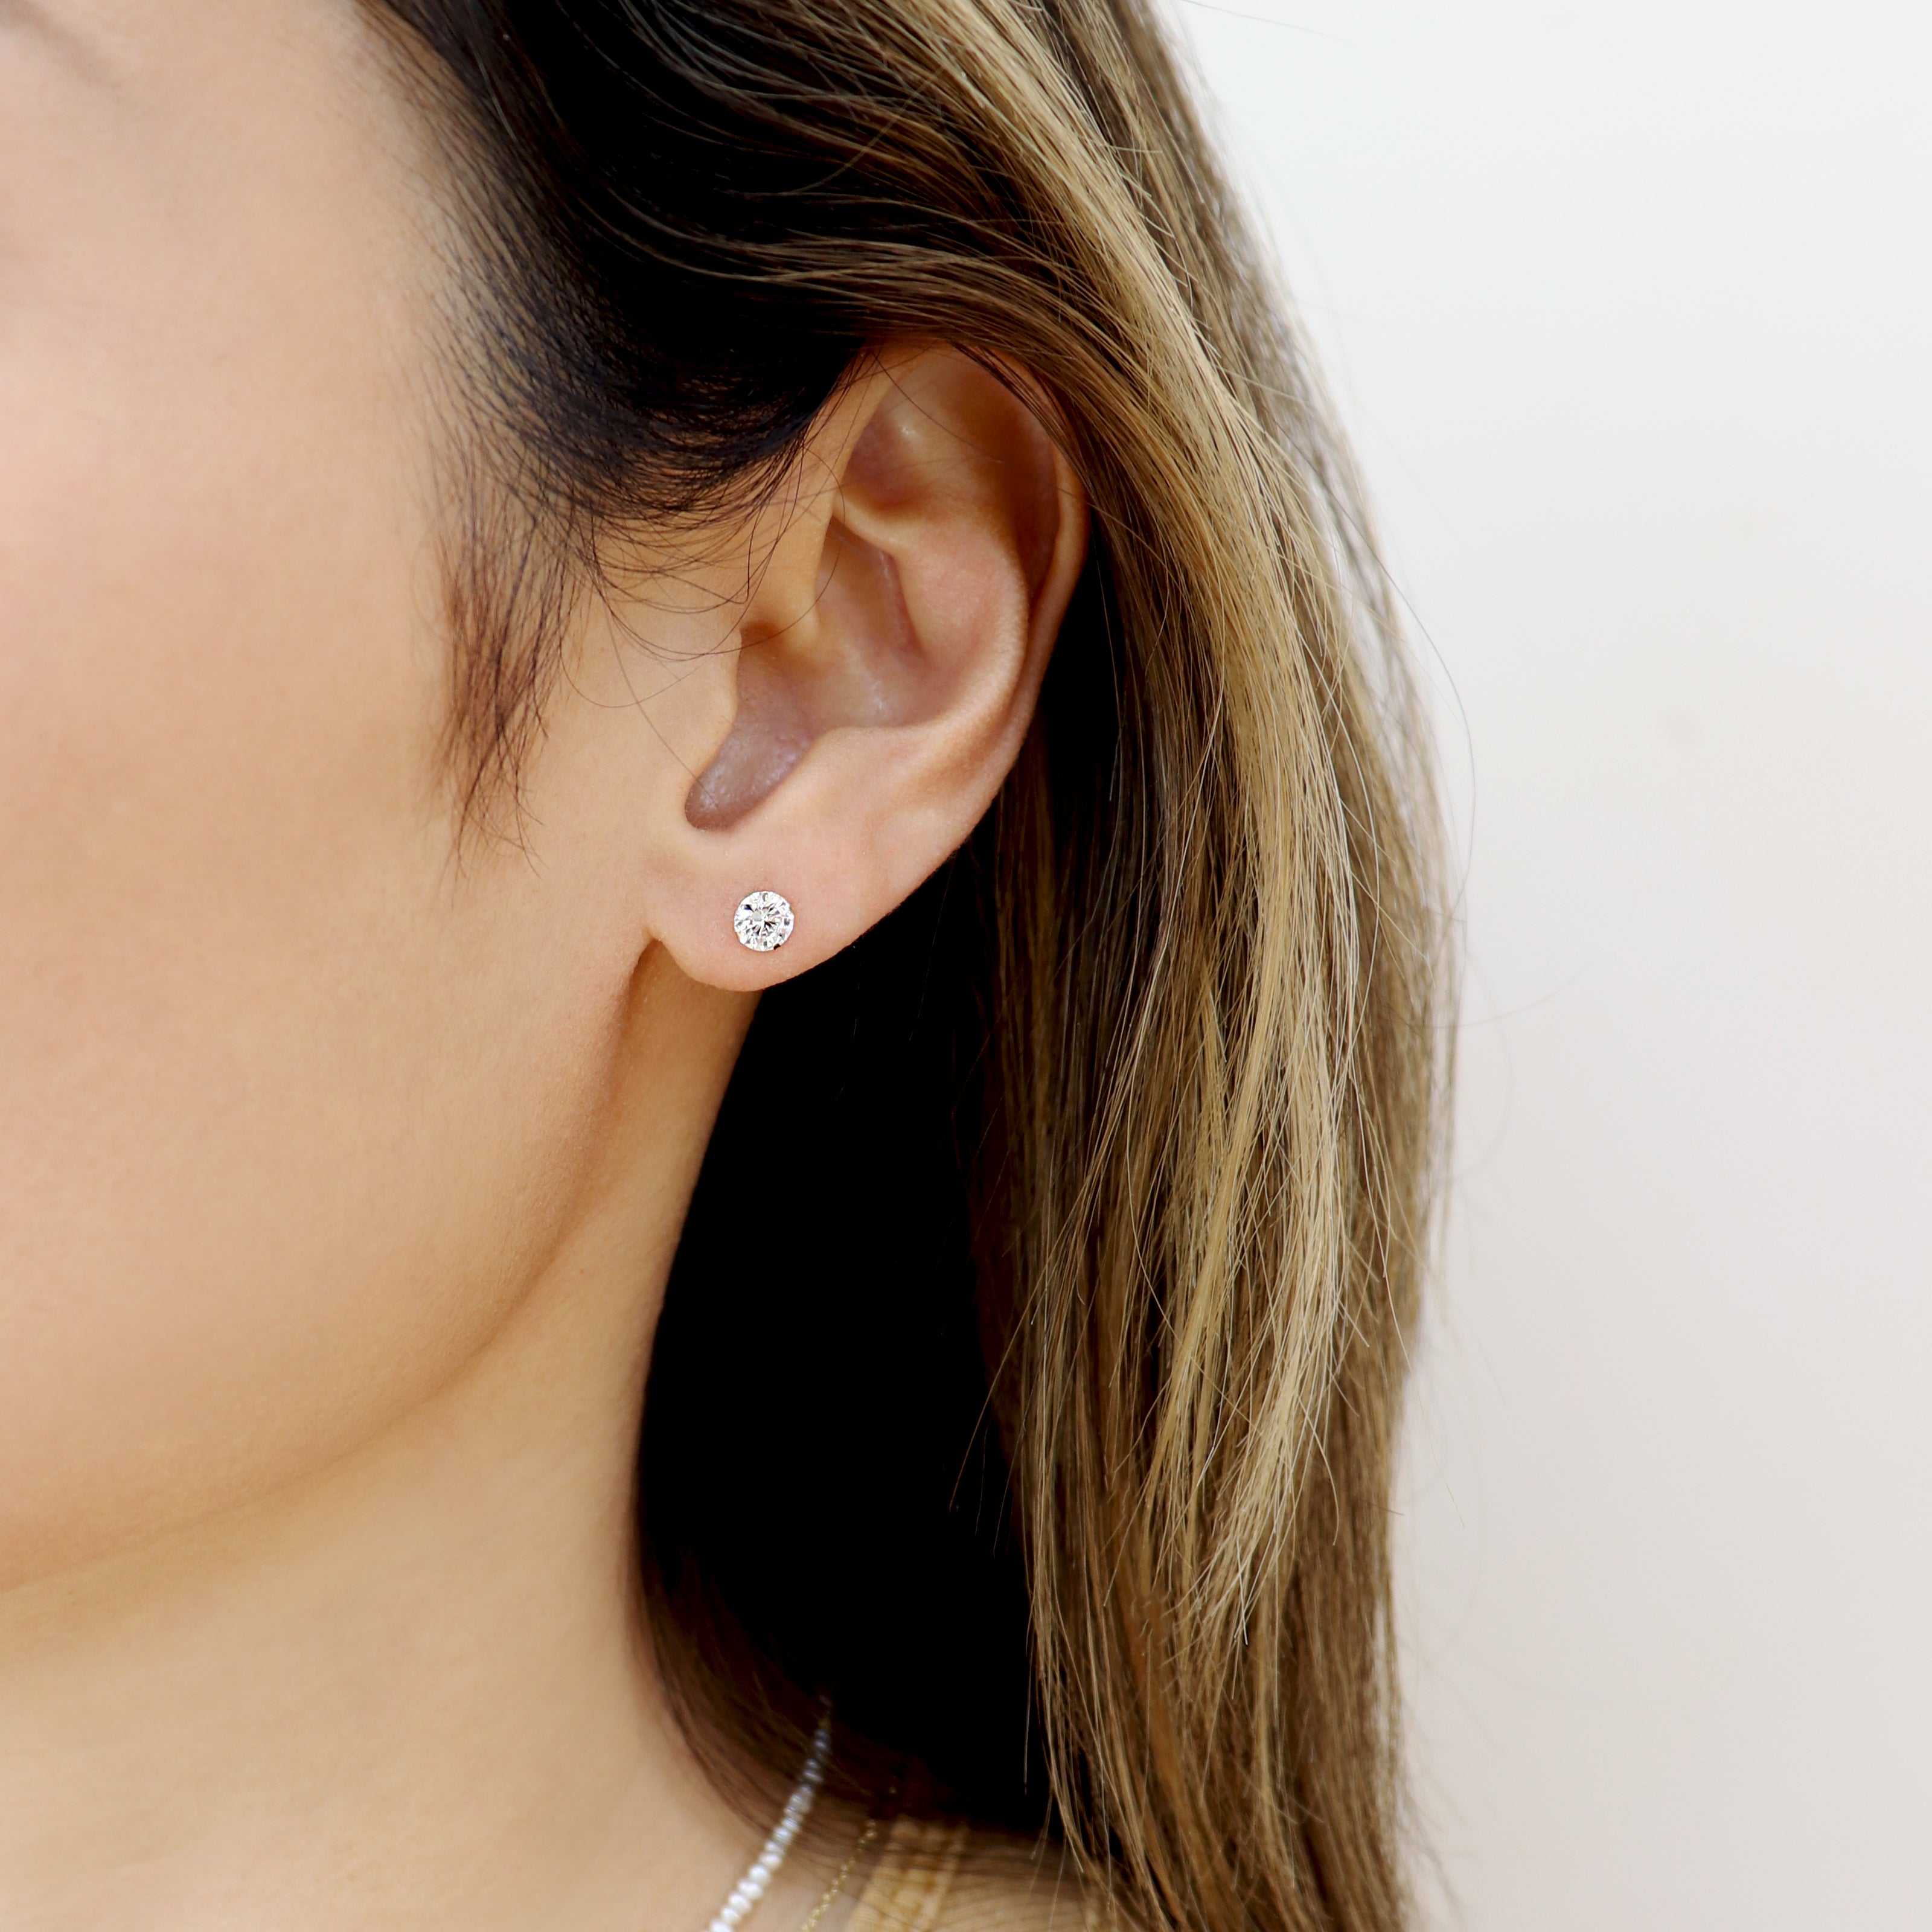 Real 14k gold stud earrings for women. Best Online Jewelry Gift for Women. Gift For Mom. Gift For Girlfriend